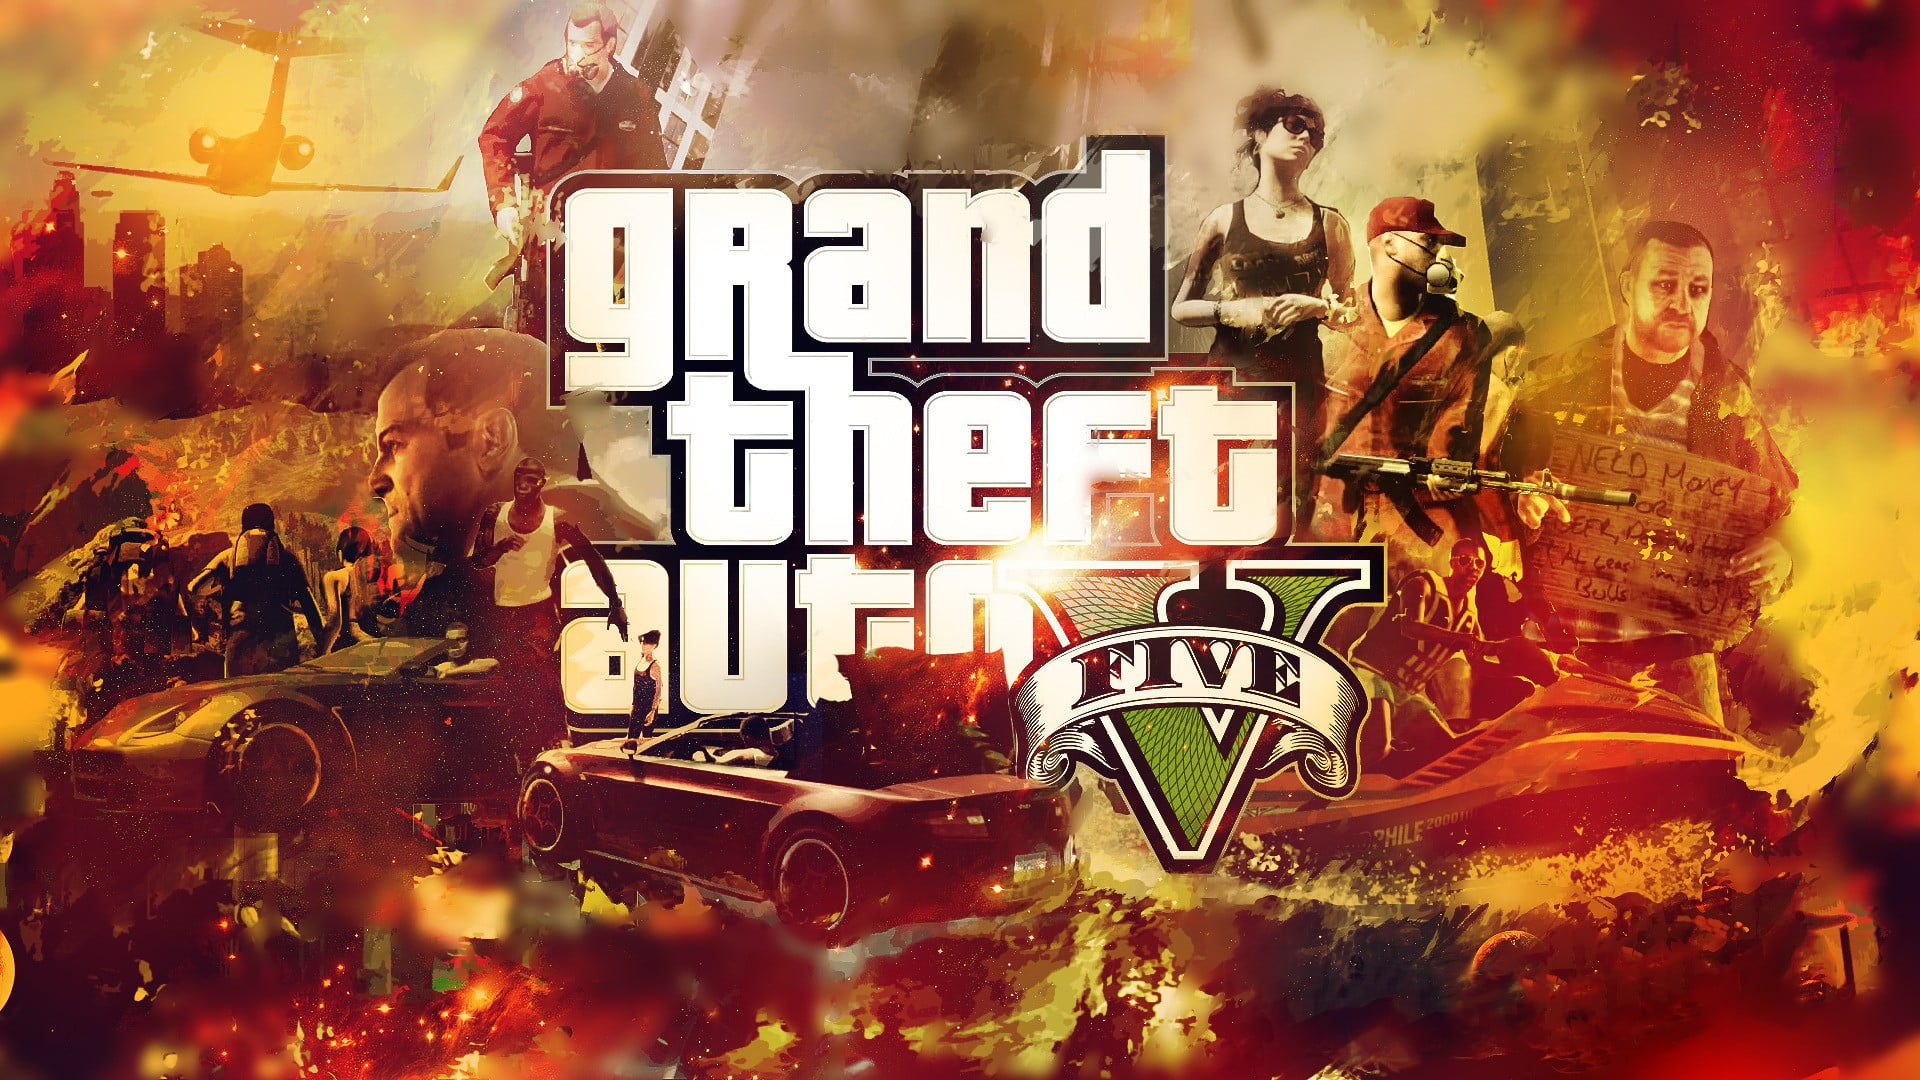 Grand Theft Auto Five poster, Grand Theft Auto V, Rockstar Games, video games